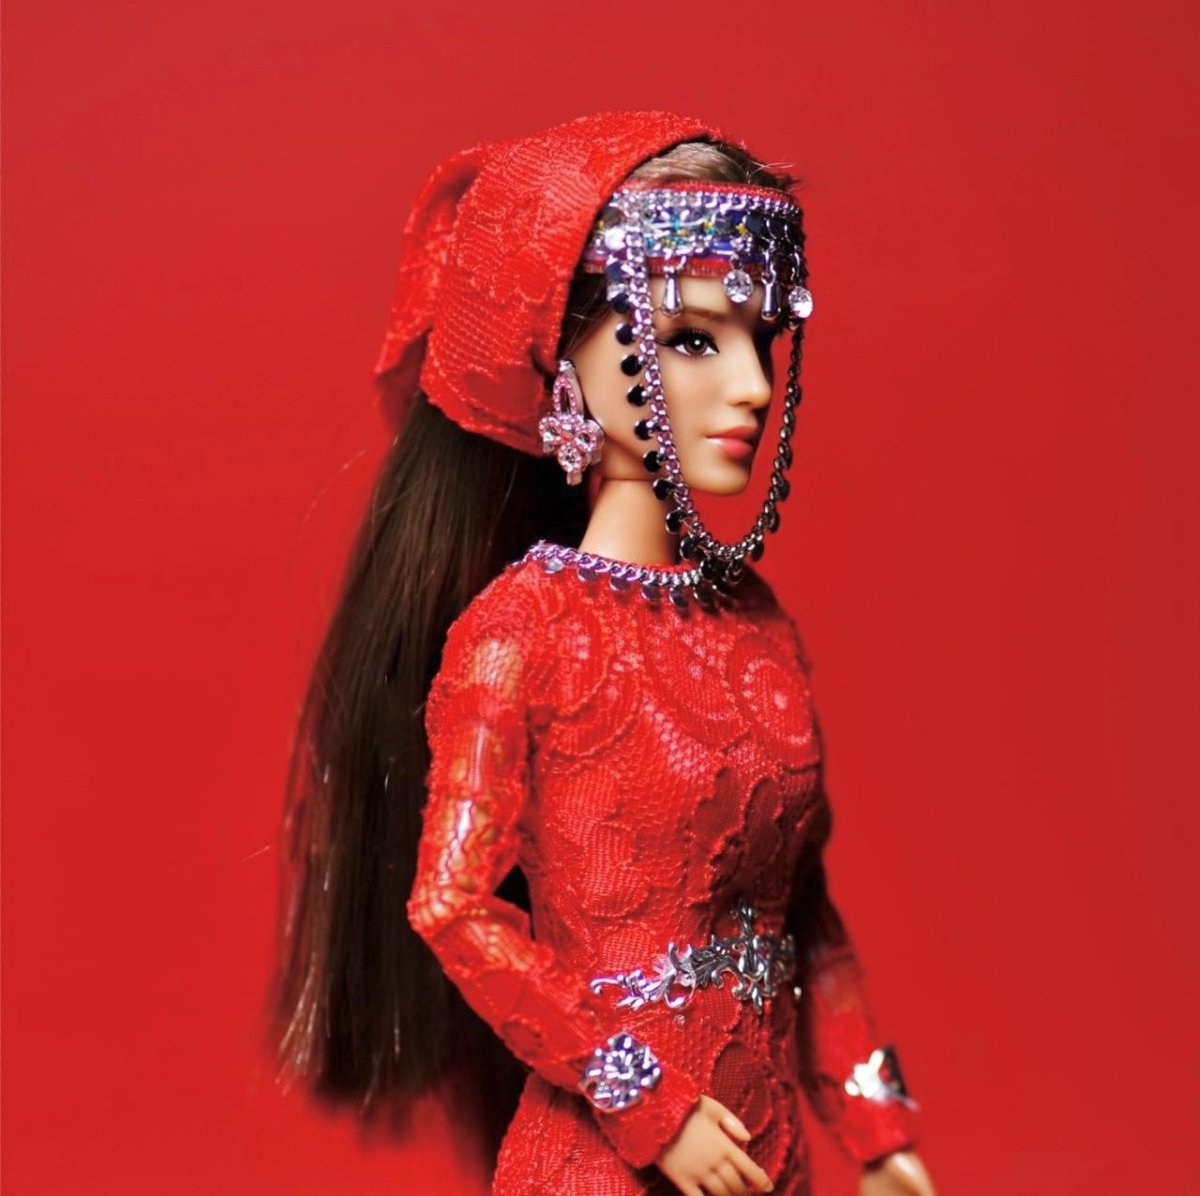 Armenian Doll "Sirusho" - Pregomesh